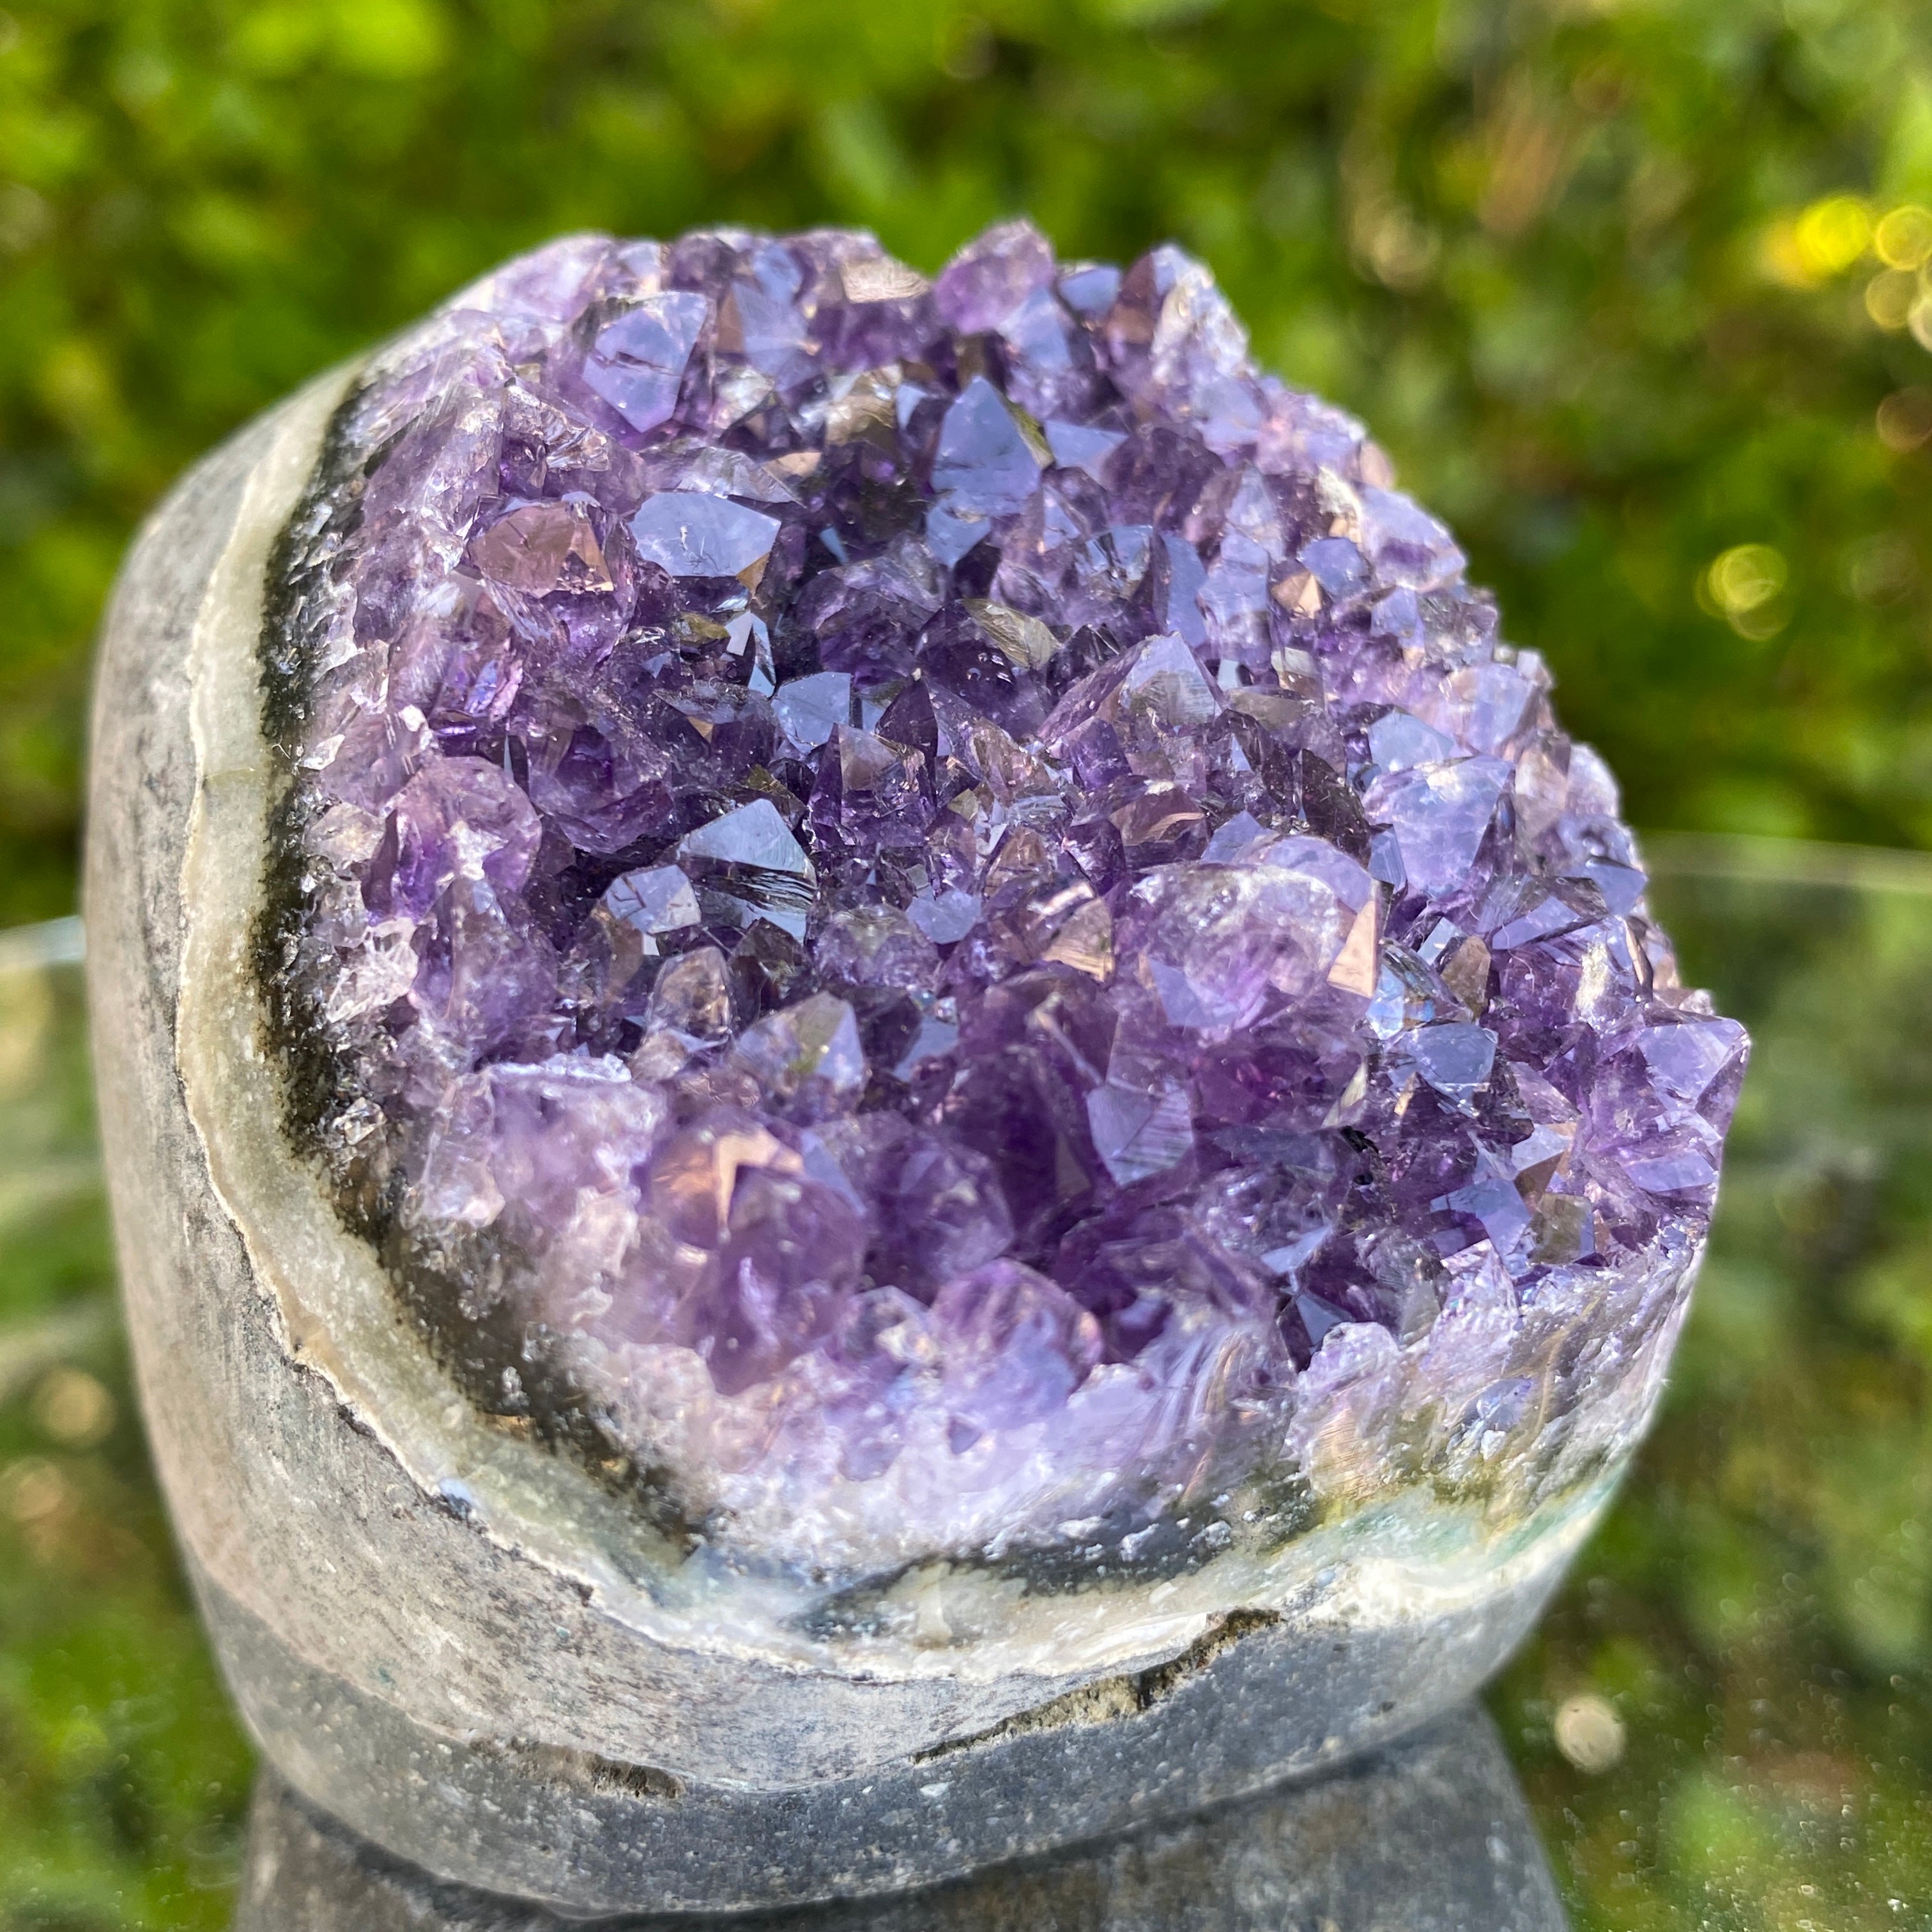 324g 7x7x6cm Grade A+ Big Smooth Crystal Purple Amethyst Geode from Uruguay